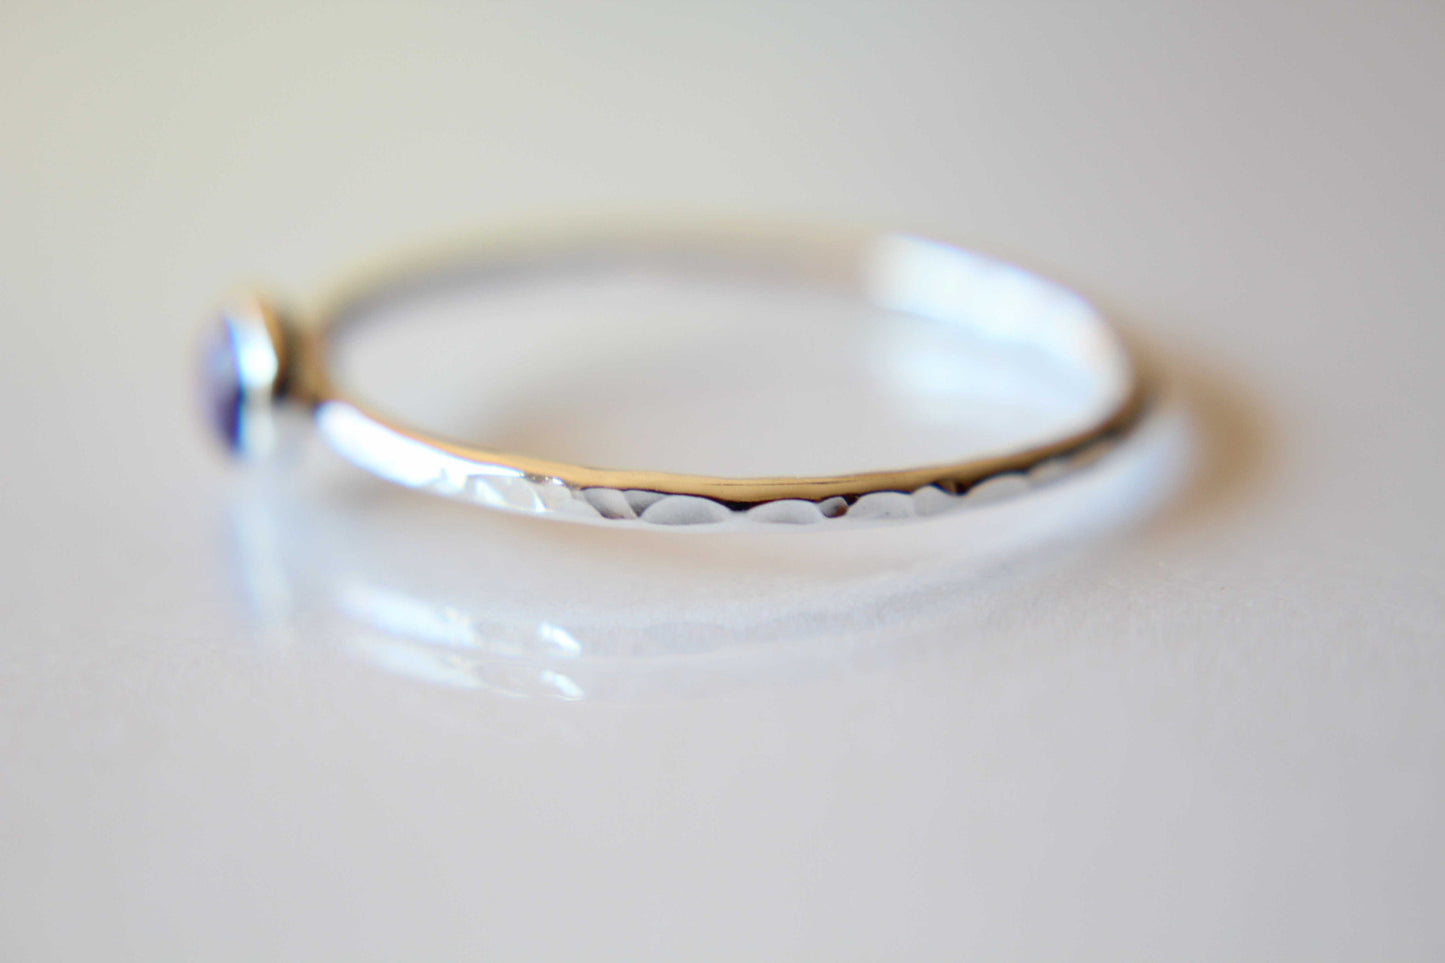 Abalone Shell Ring, Sterling Silver Abalone Shell Ring, Sterling Silver Ring, Textured Stacking Ring, Gemstone Ring, Boho Style Ring, Gift